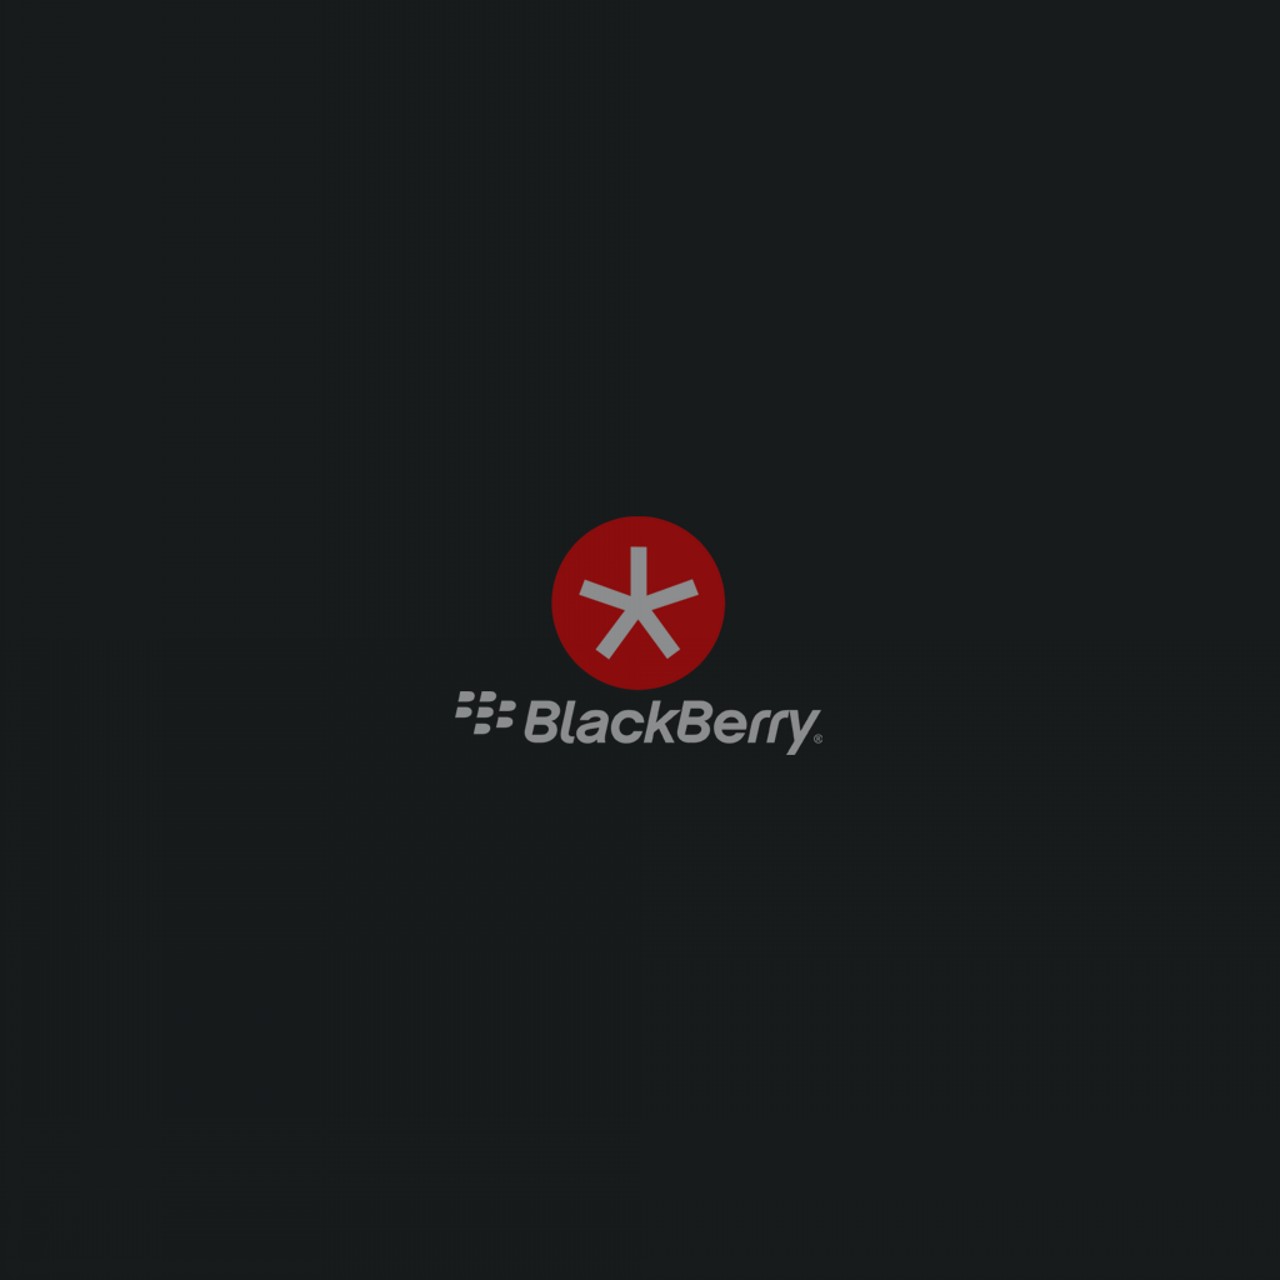 Blackberry Logo Wallpaper Image Gallery